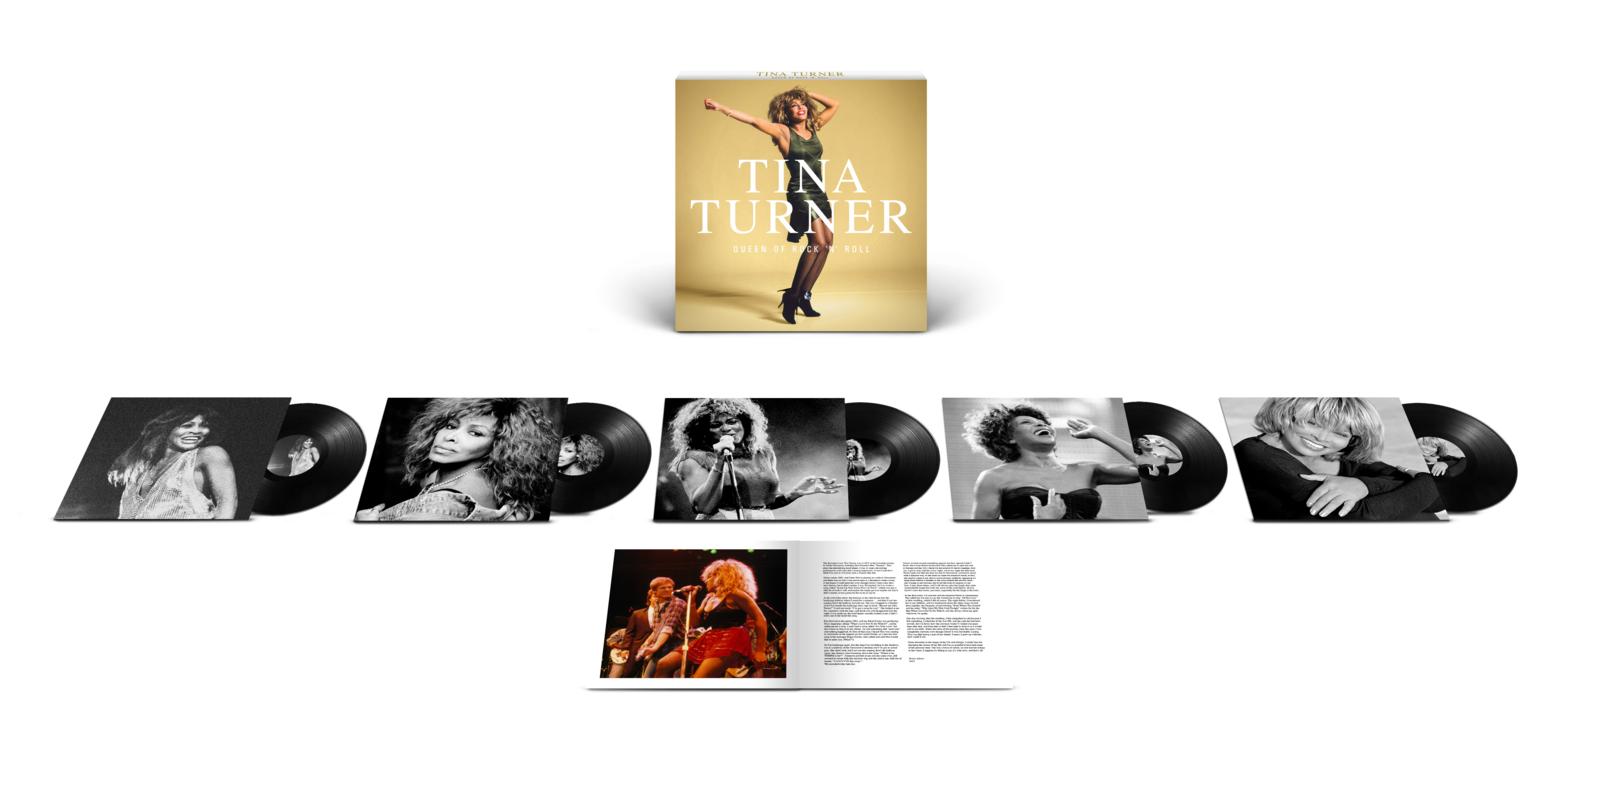 TINA TURNER - Queen of Rock ‘n’ Roll - 5LP - Black Vinyl Box Set